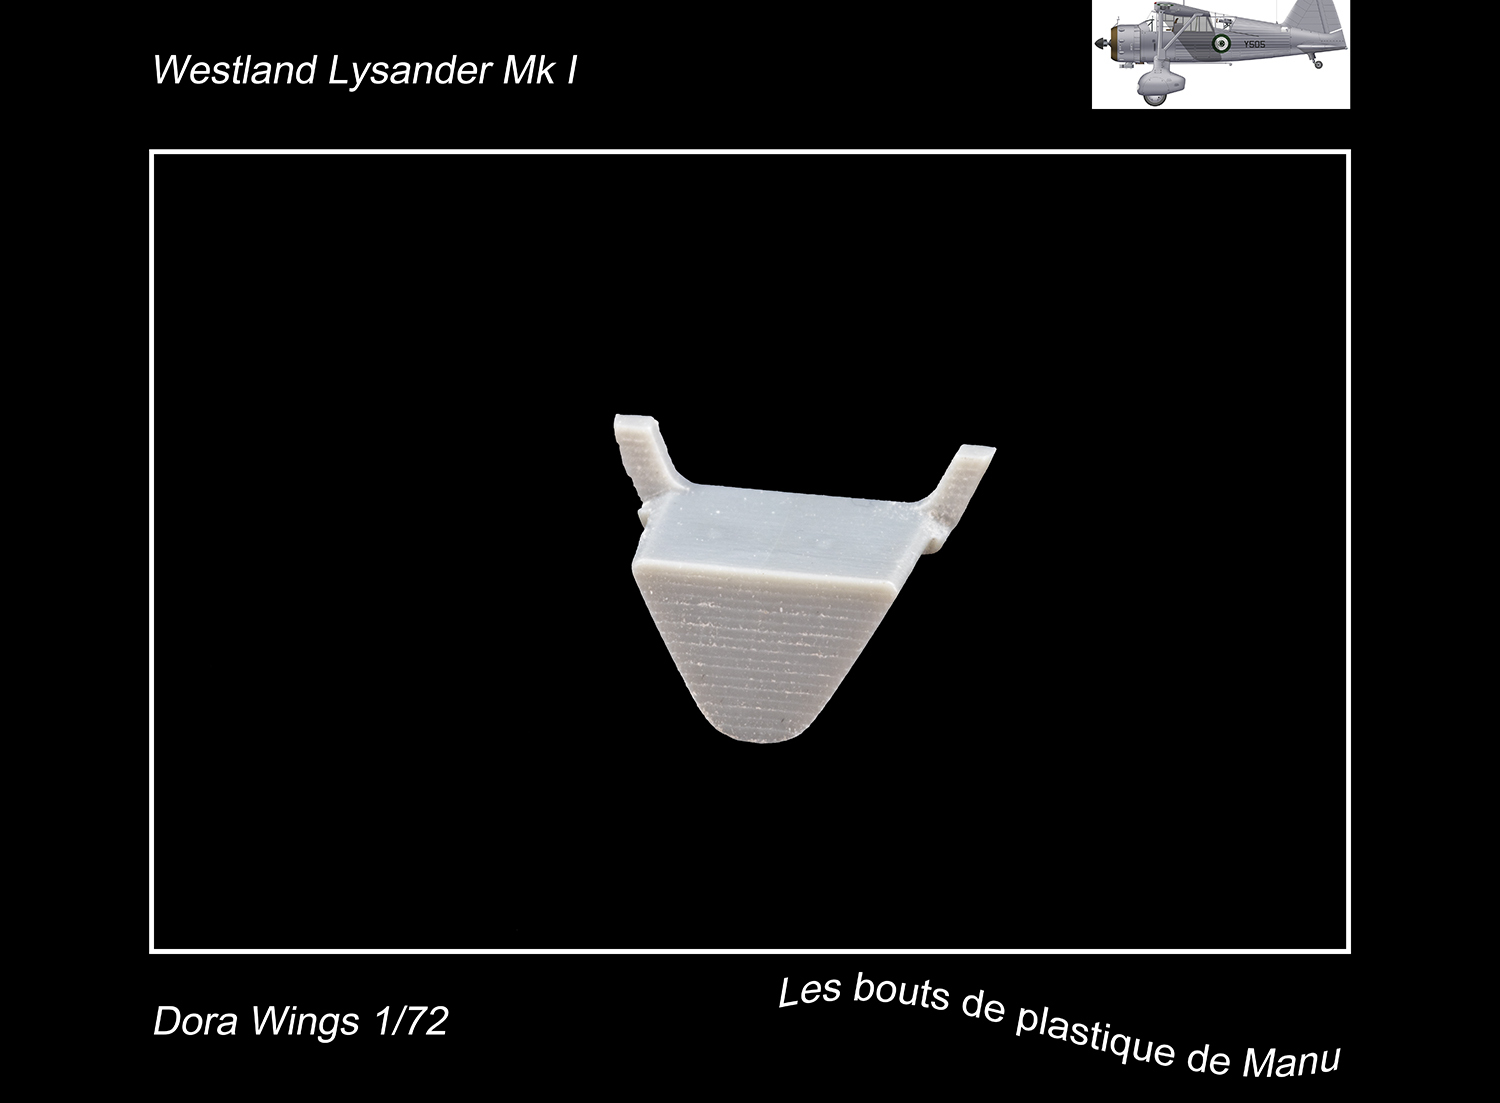 [Dora Wings] Westland Lysander Mk I - Je préfère en rire... Ql8c